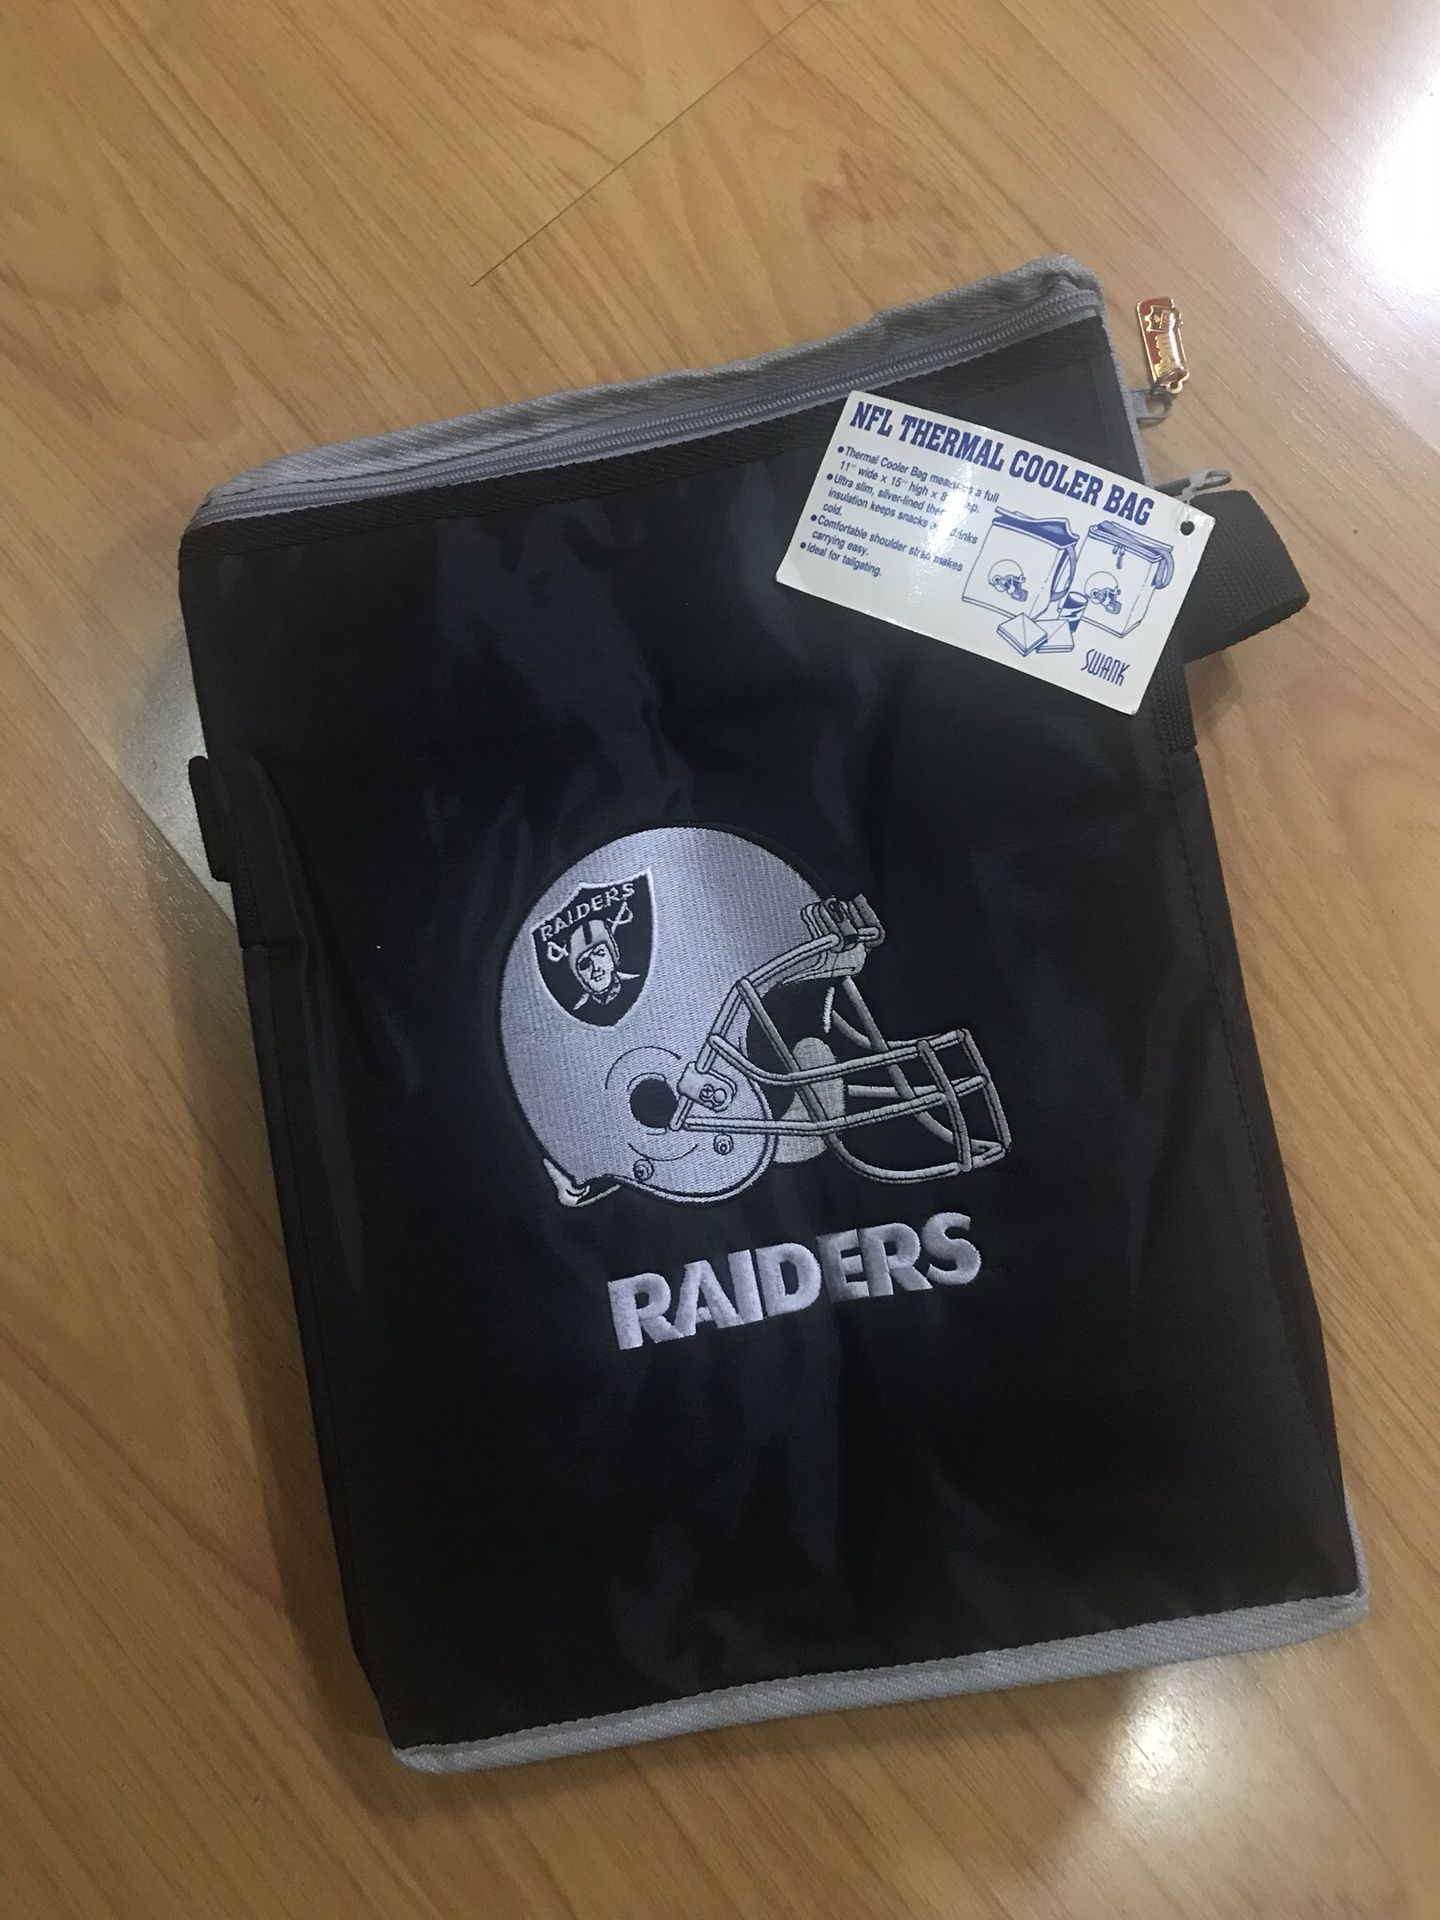 Brand new NFL Raiders cooler bag